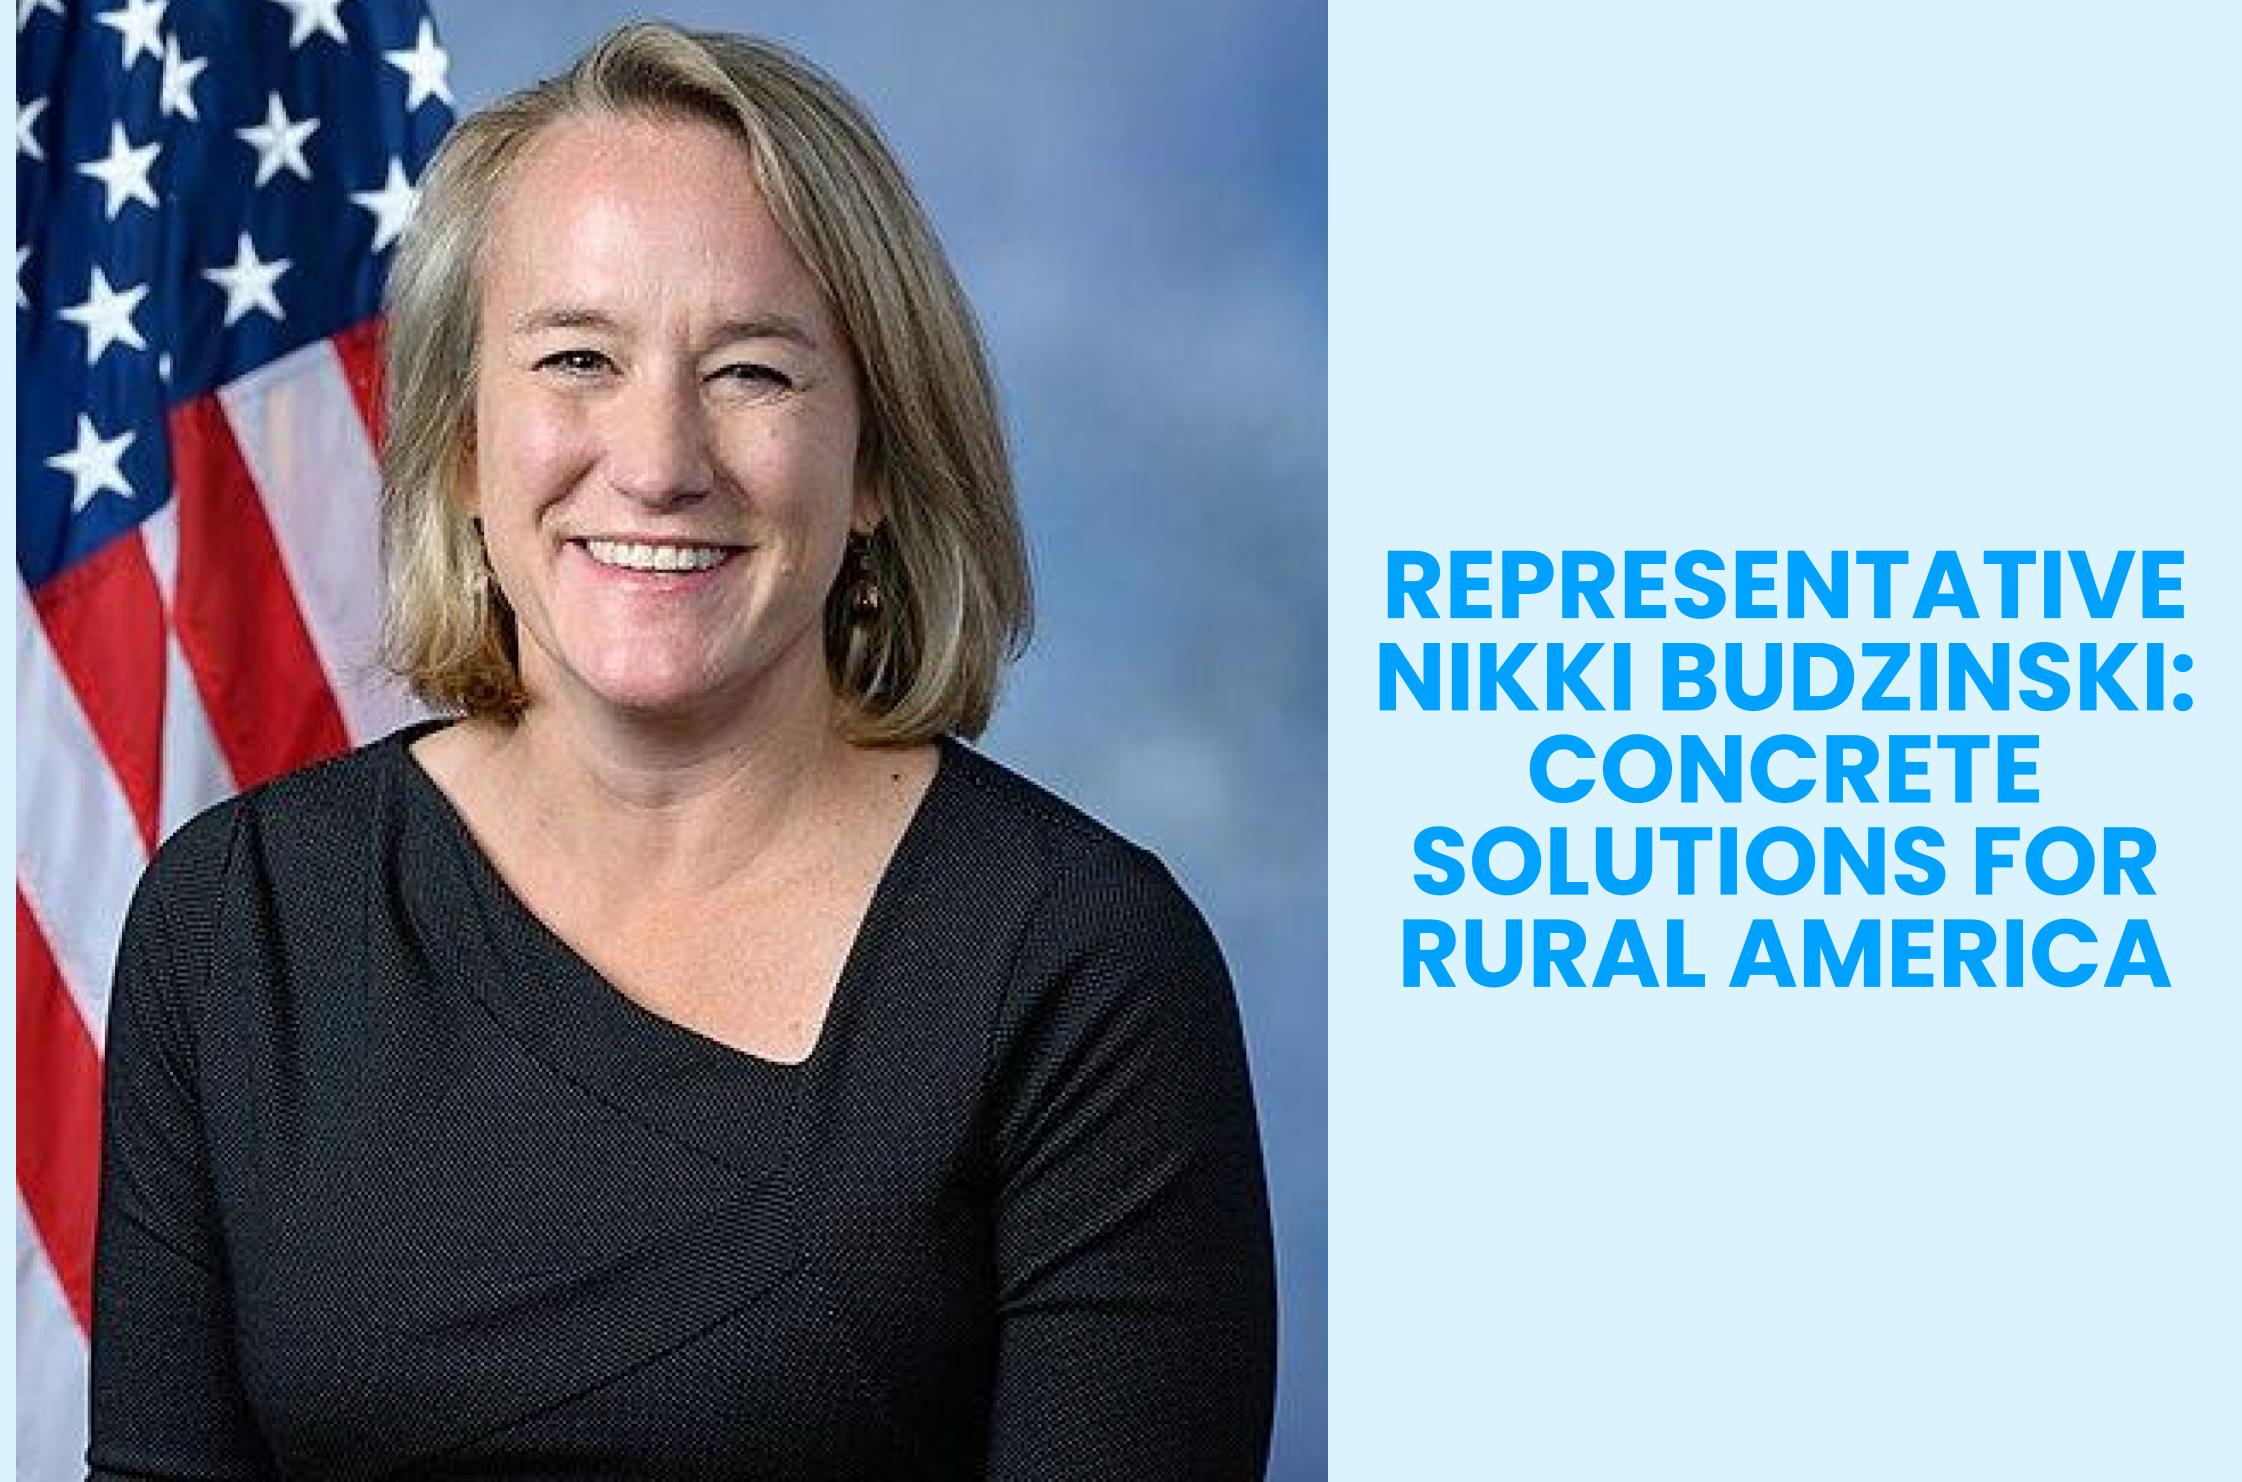 Representative Nikki Budzinski official image with event text